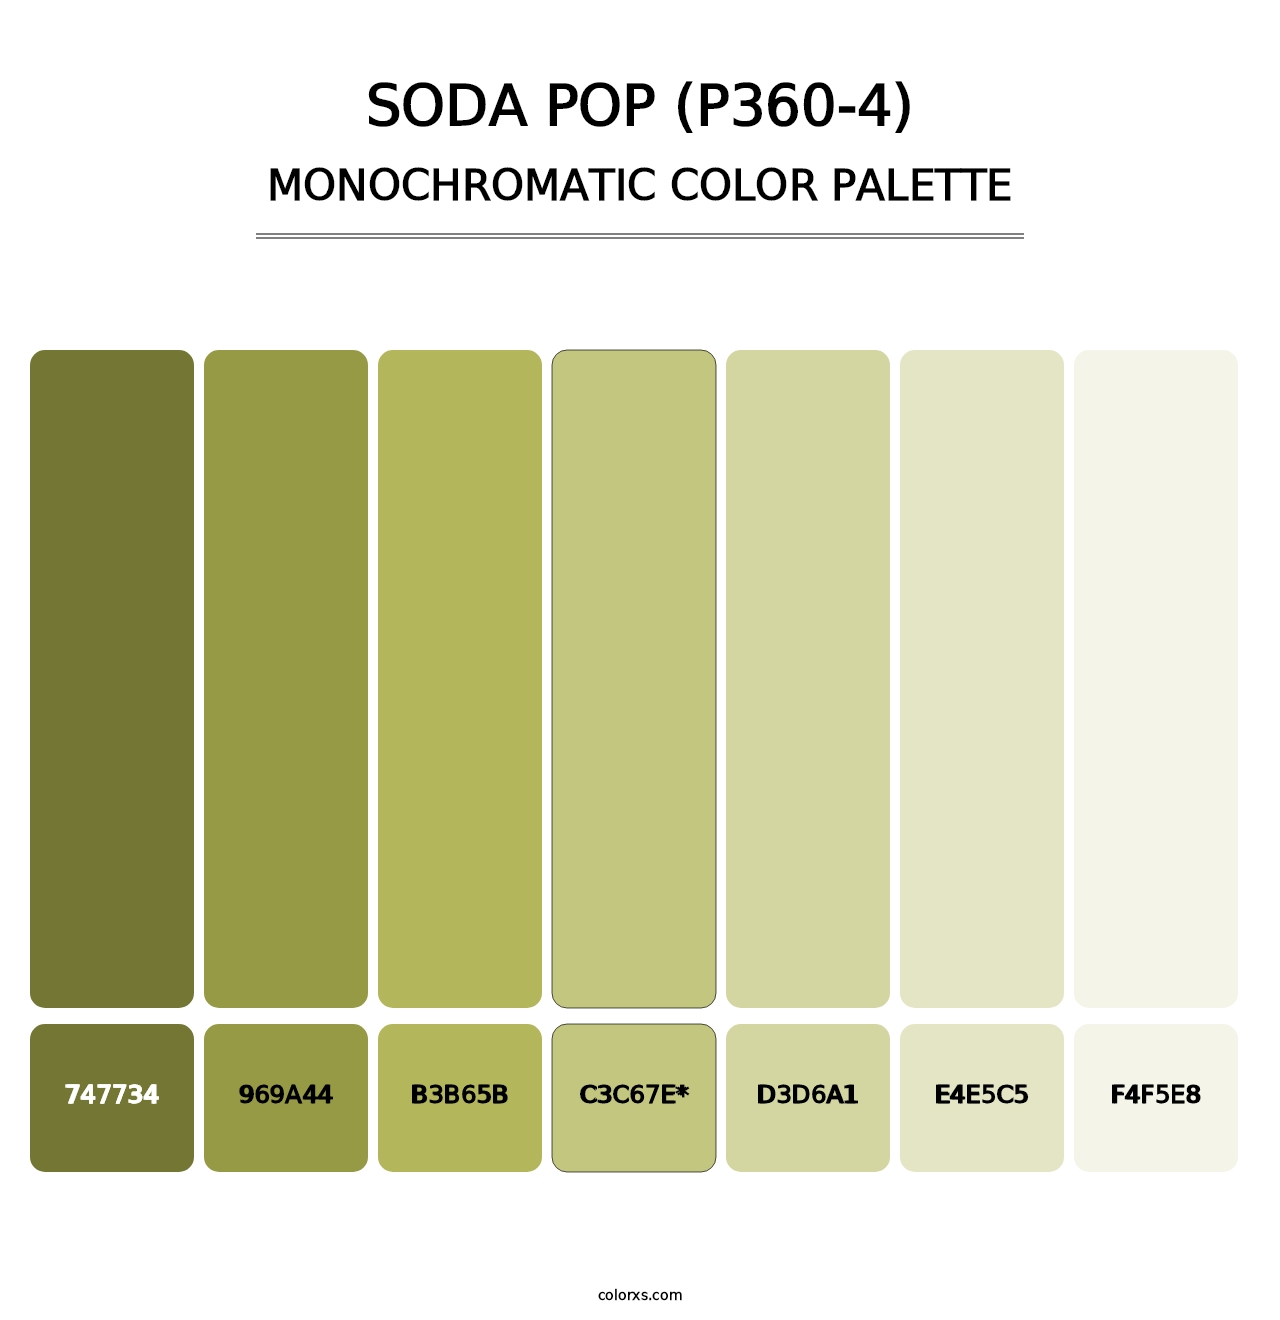 Soda Pop (P360-4) - Monochromatic Color Palette